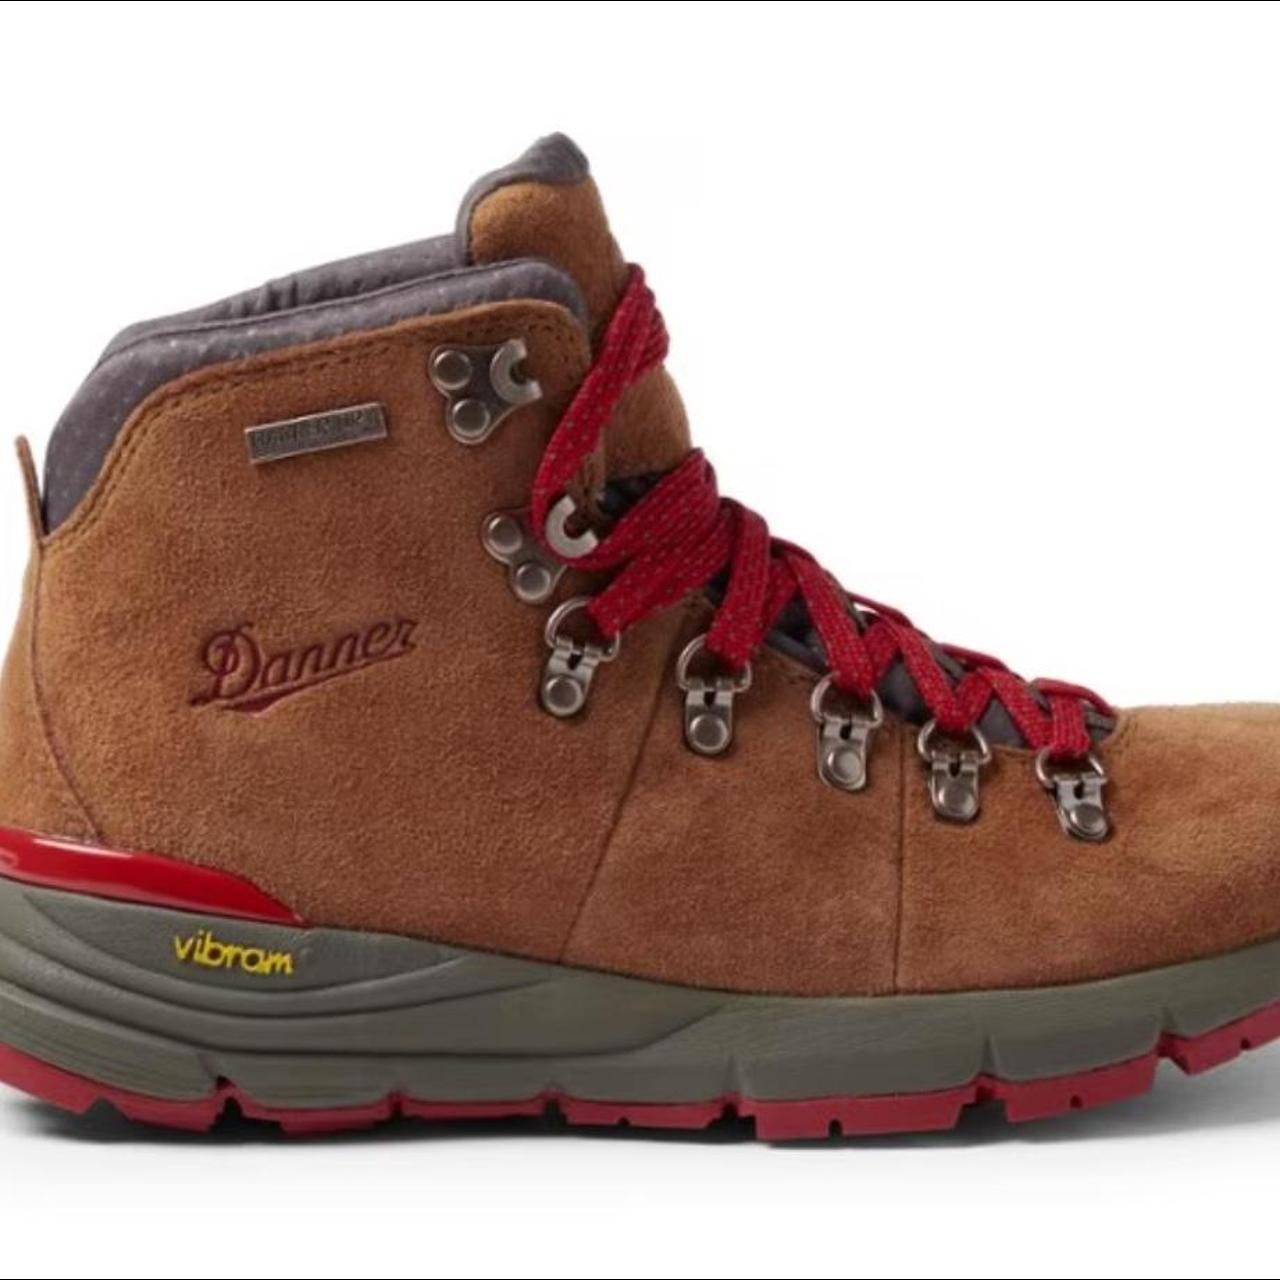 Danner Hiking Boots Original price 190 Lightly worn!!! - Depop